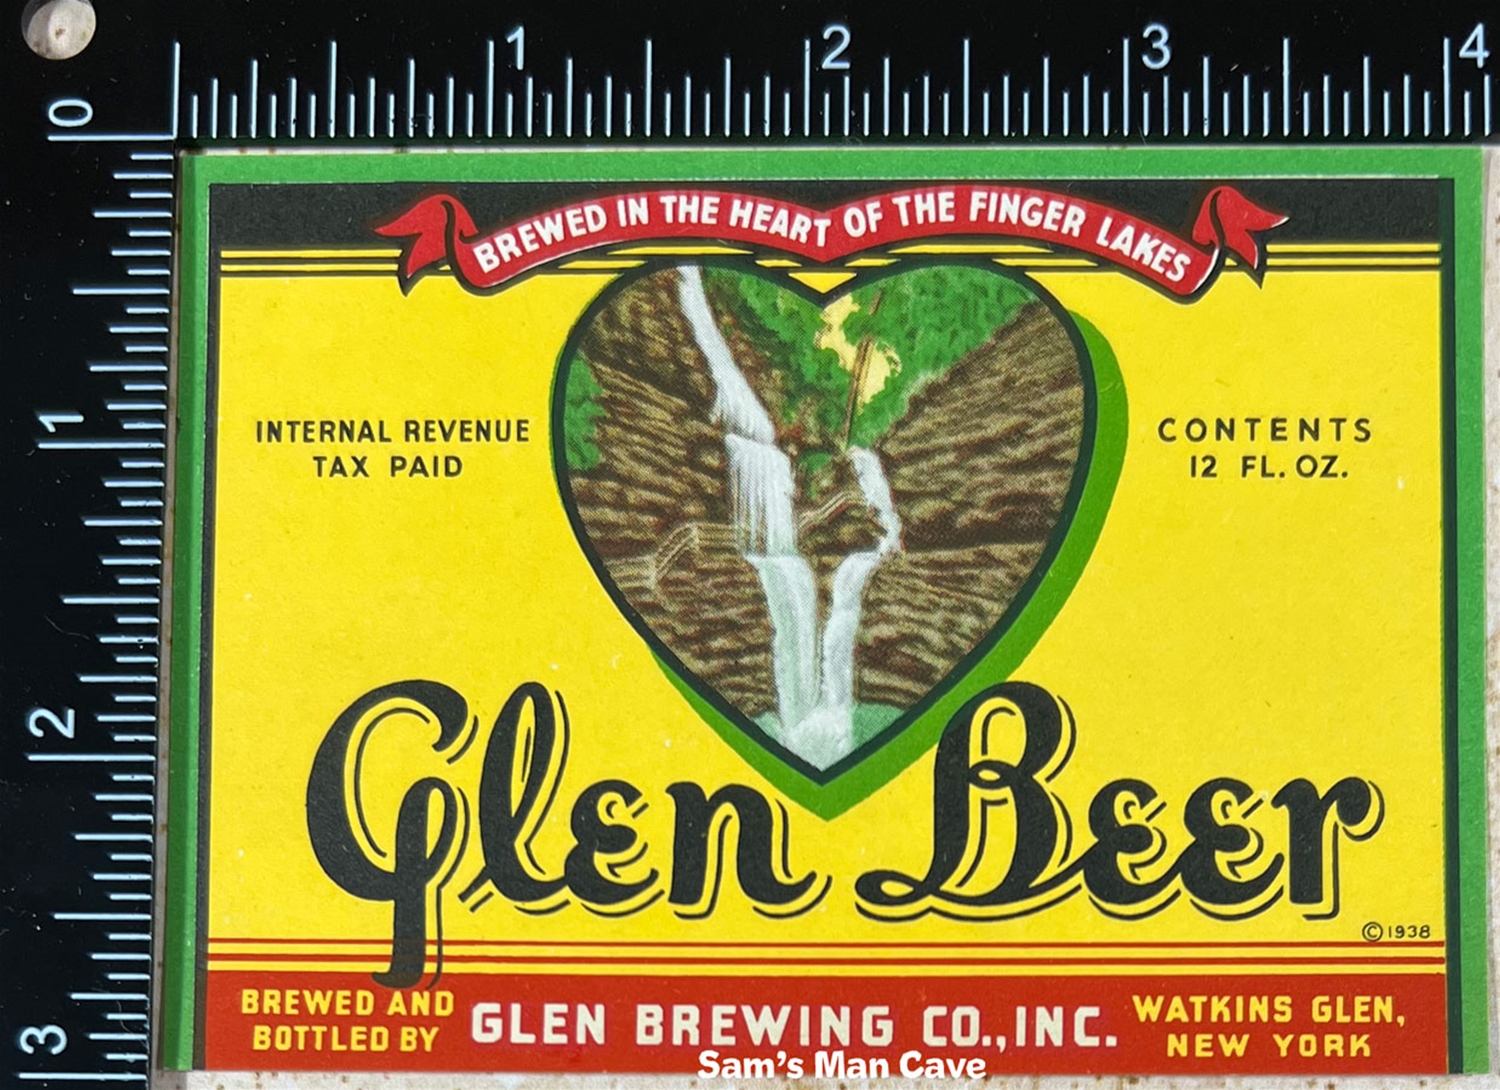 Glen Beer IRTP  Label